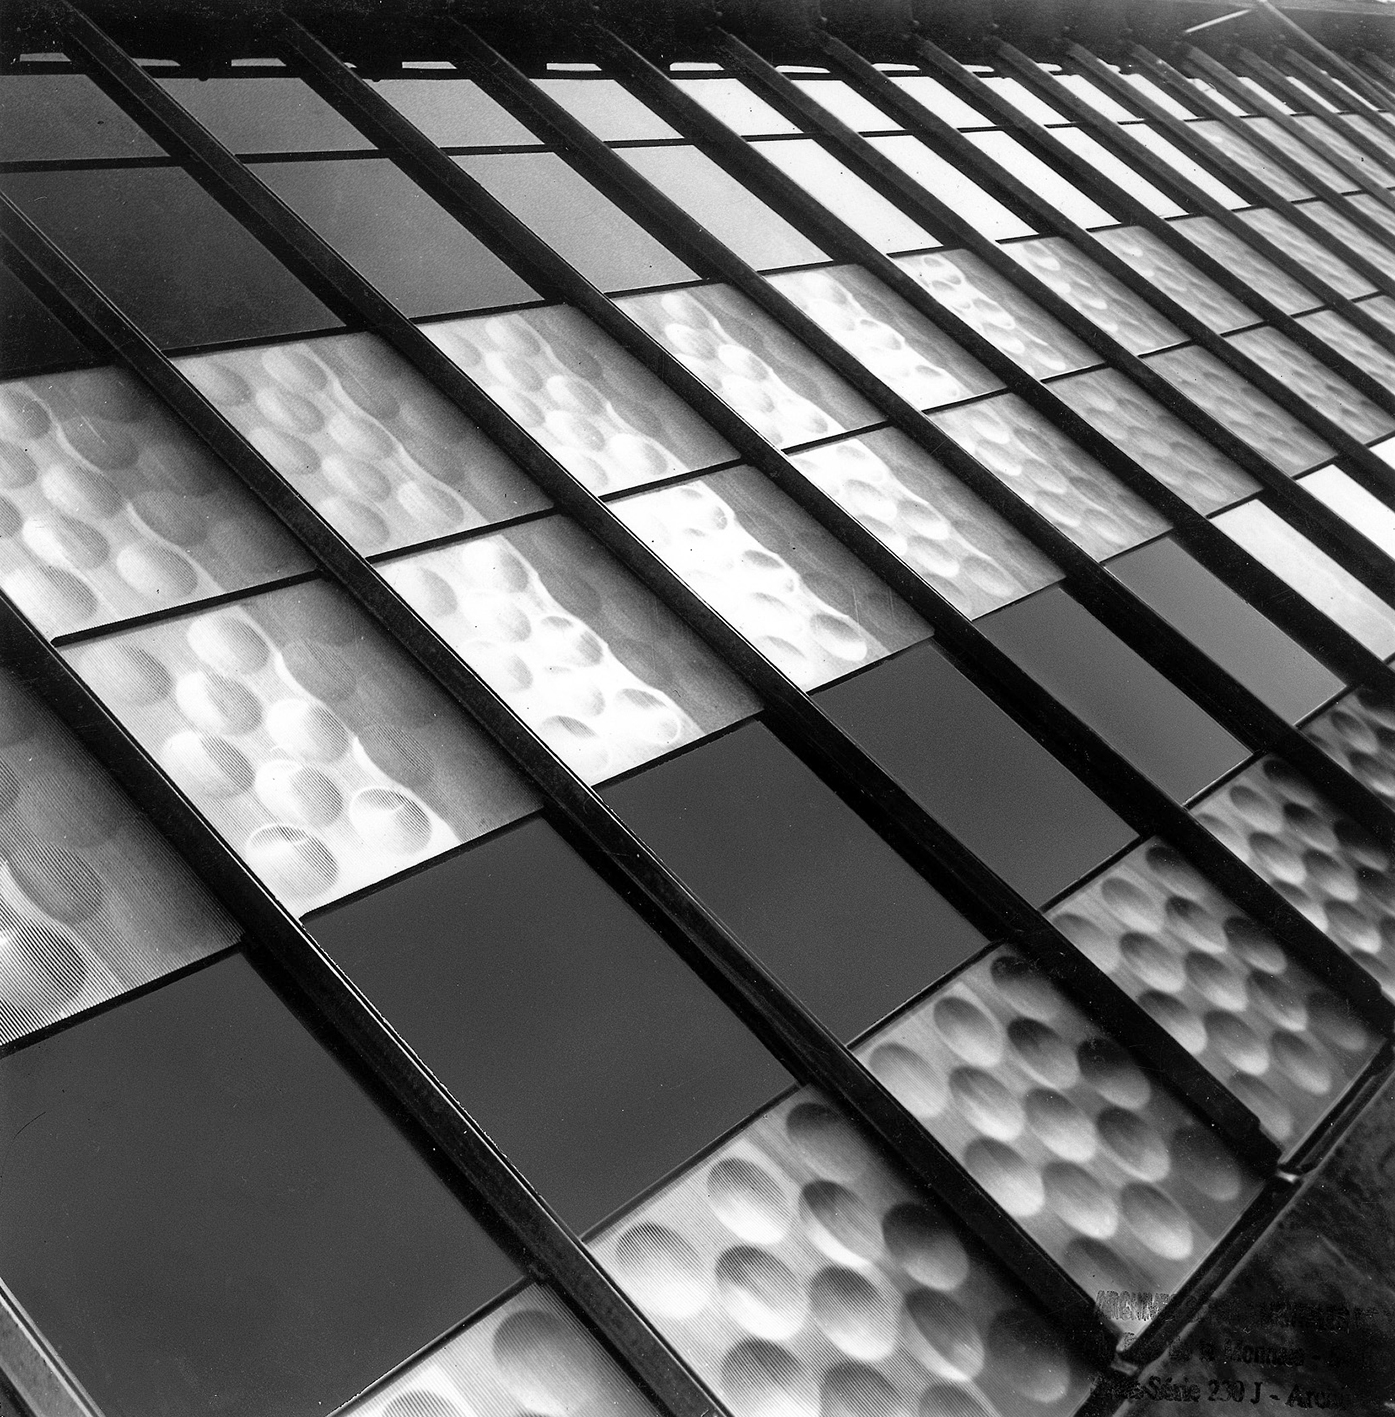 Aluminum Centenary Pavilion, Quai d’Orsay, Paris, 1954 (Jean Prouvé, with engineer M. Hugonet). Facade panels pressed and ribbed aluminum sheeting